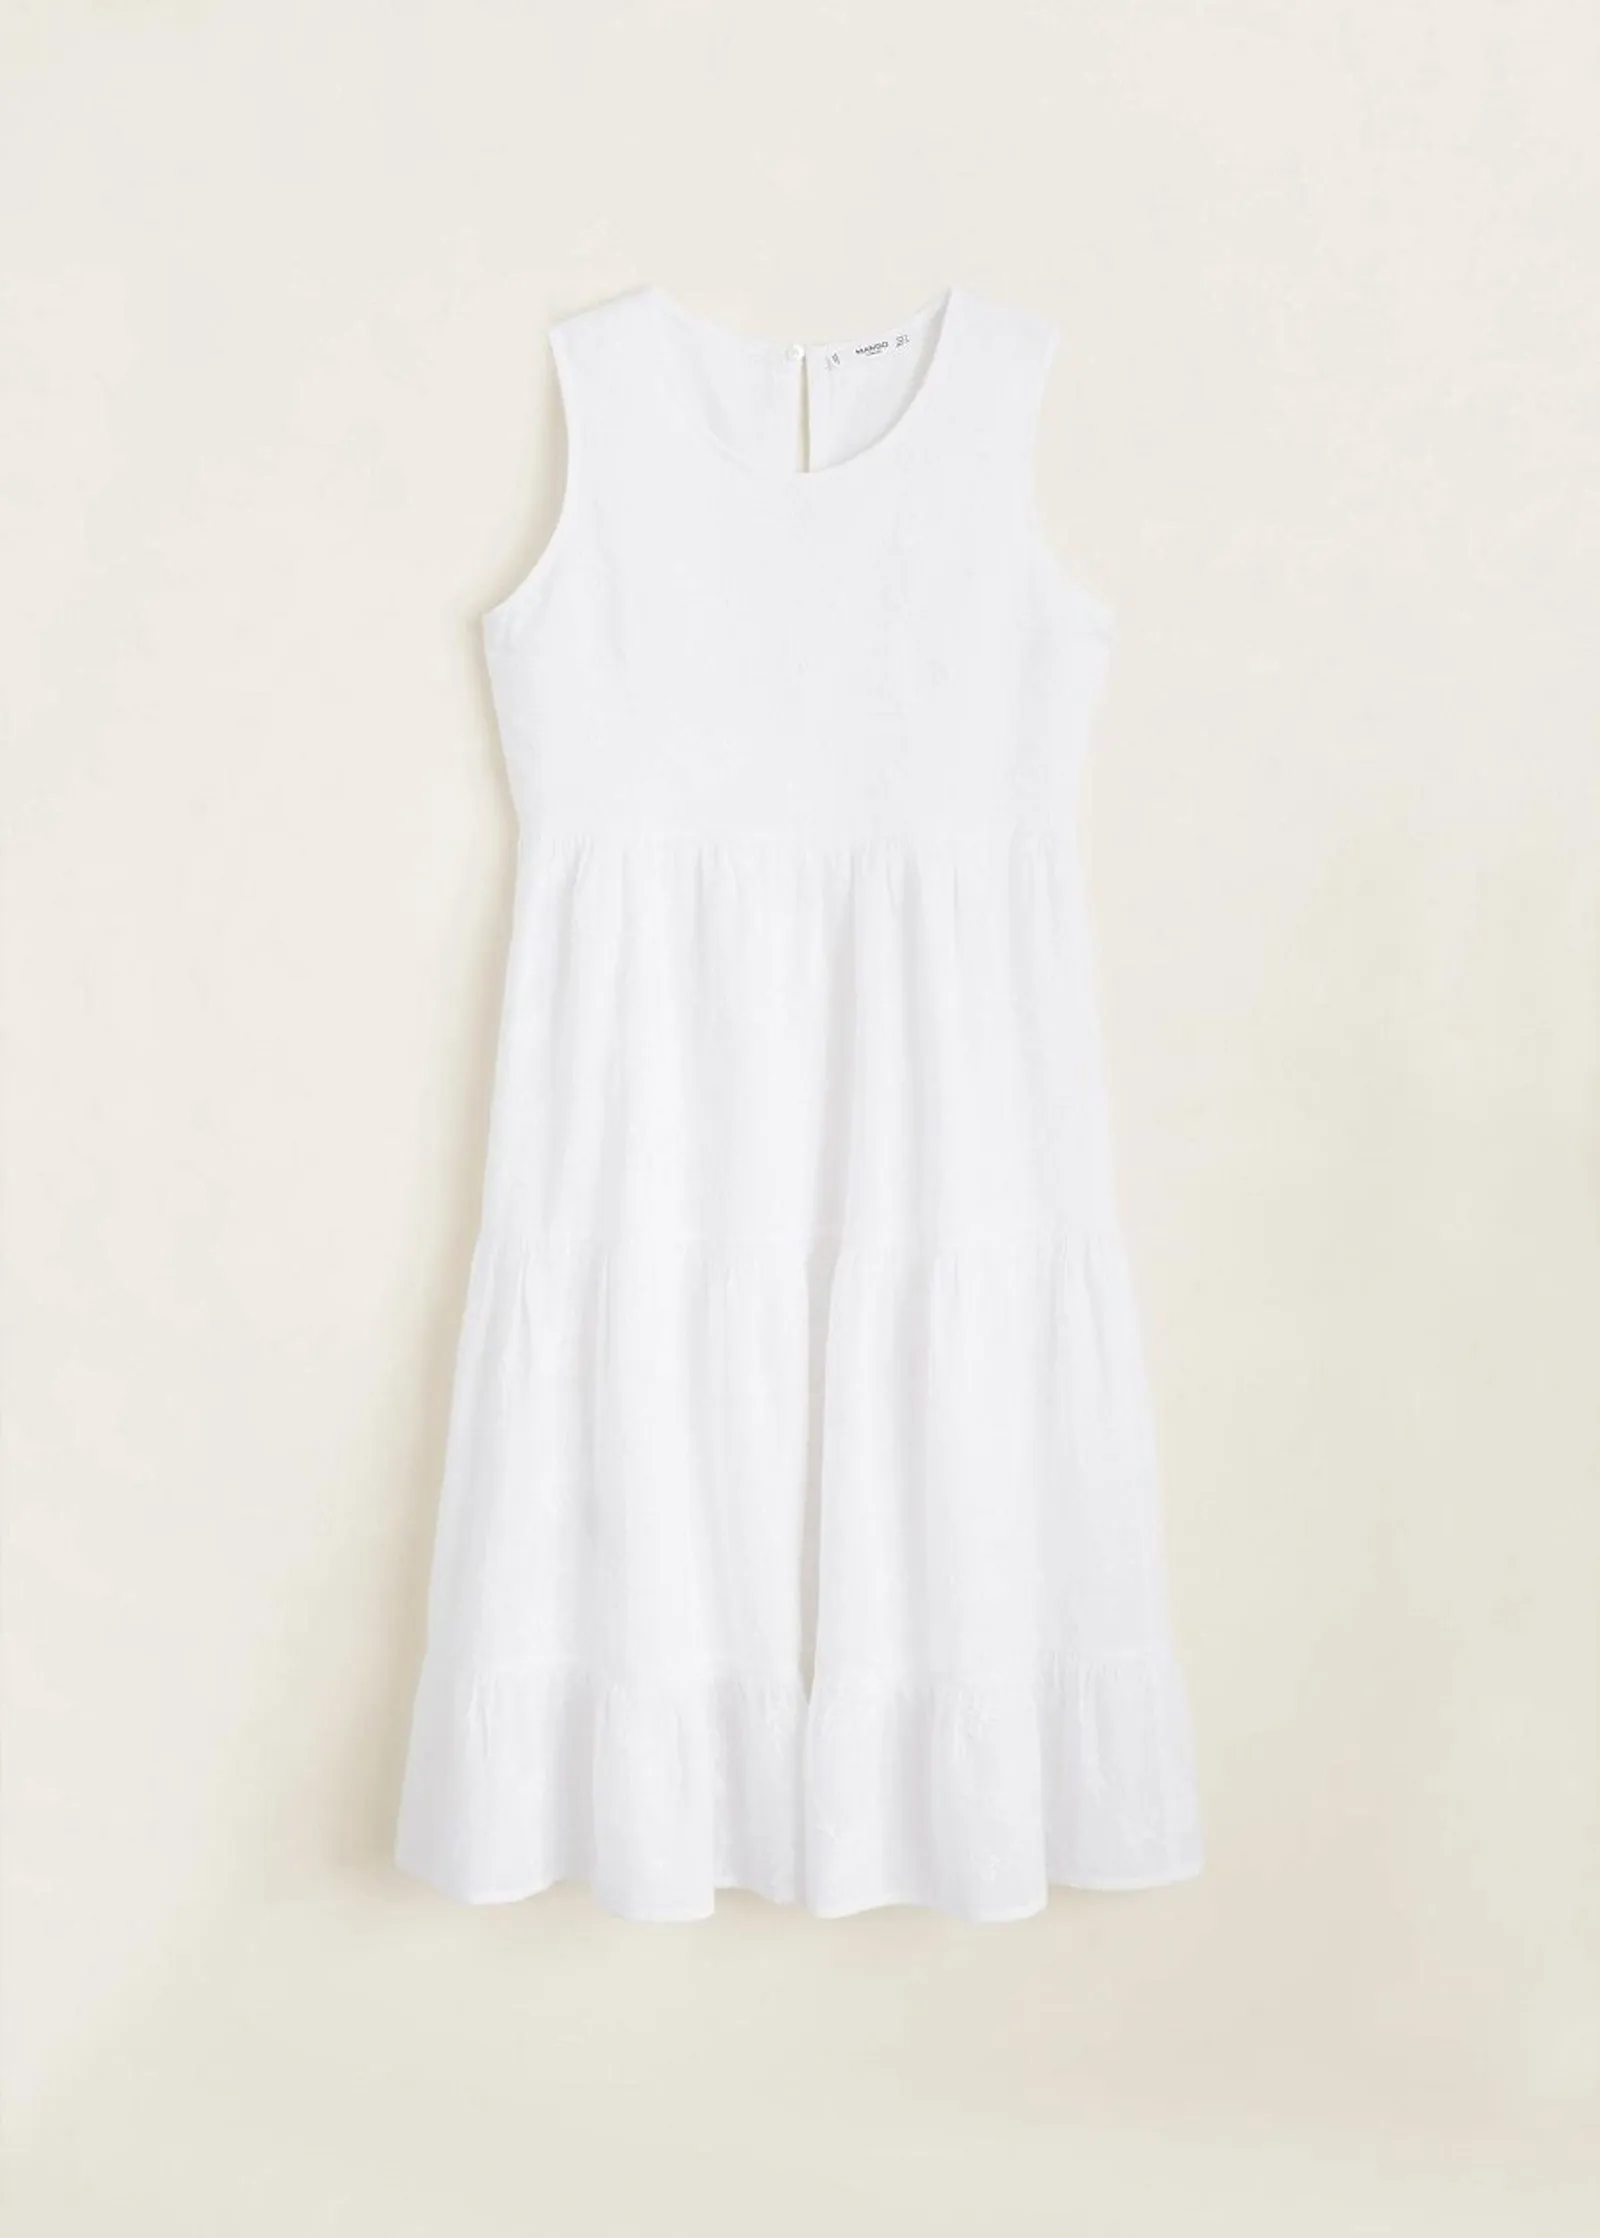 Pilihan Dress Putih Santai untuk Dikenakan Sehari-hari